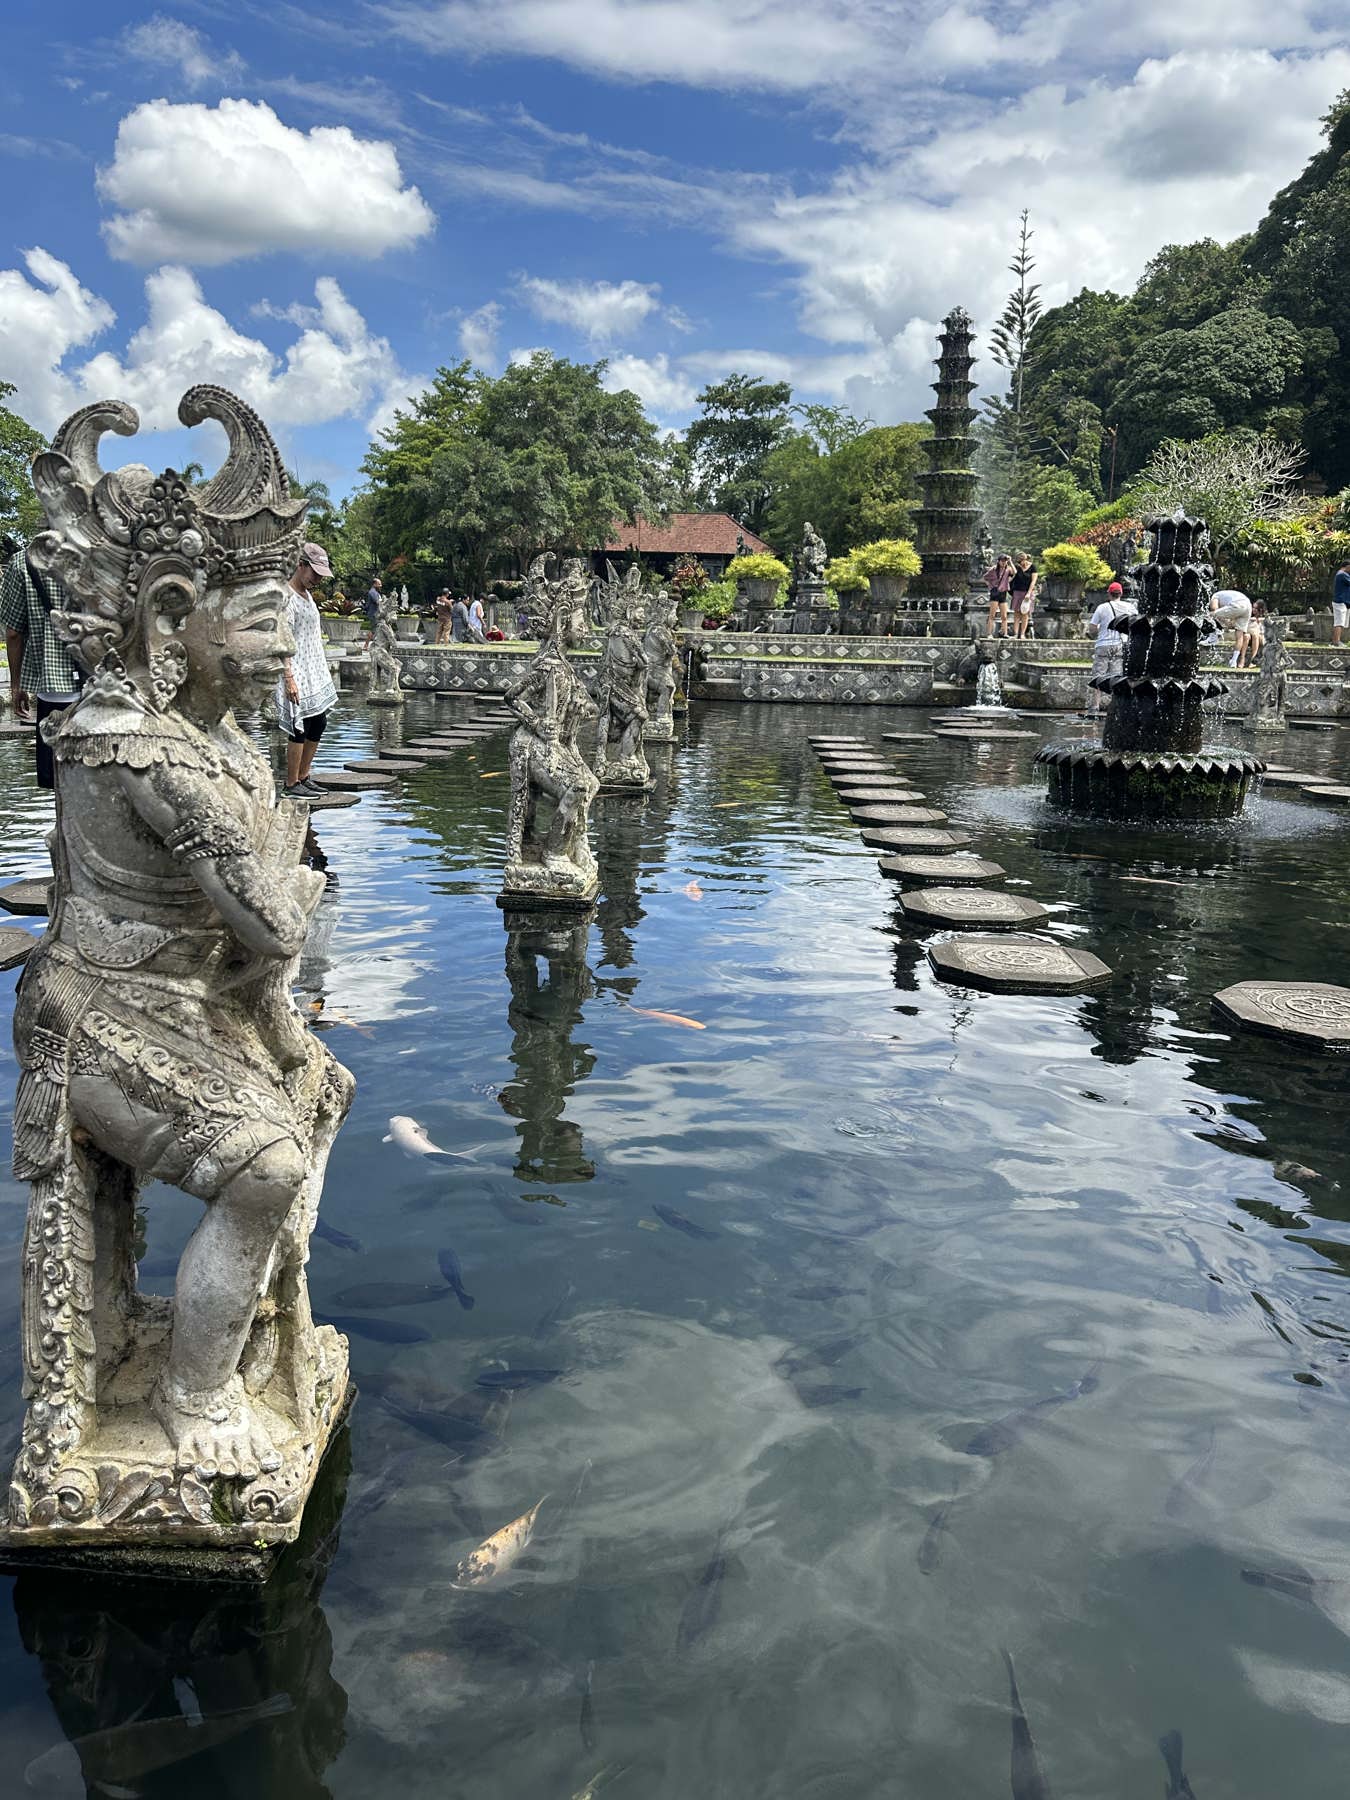 Image Eastern Bali (1-2 days)